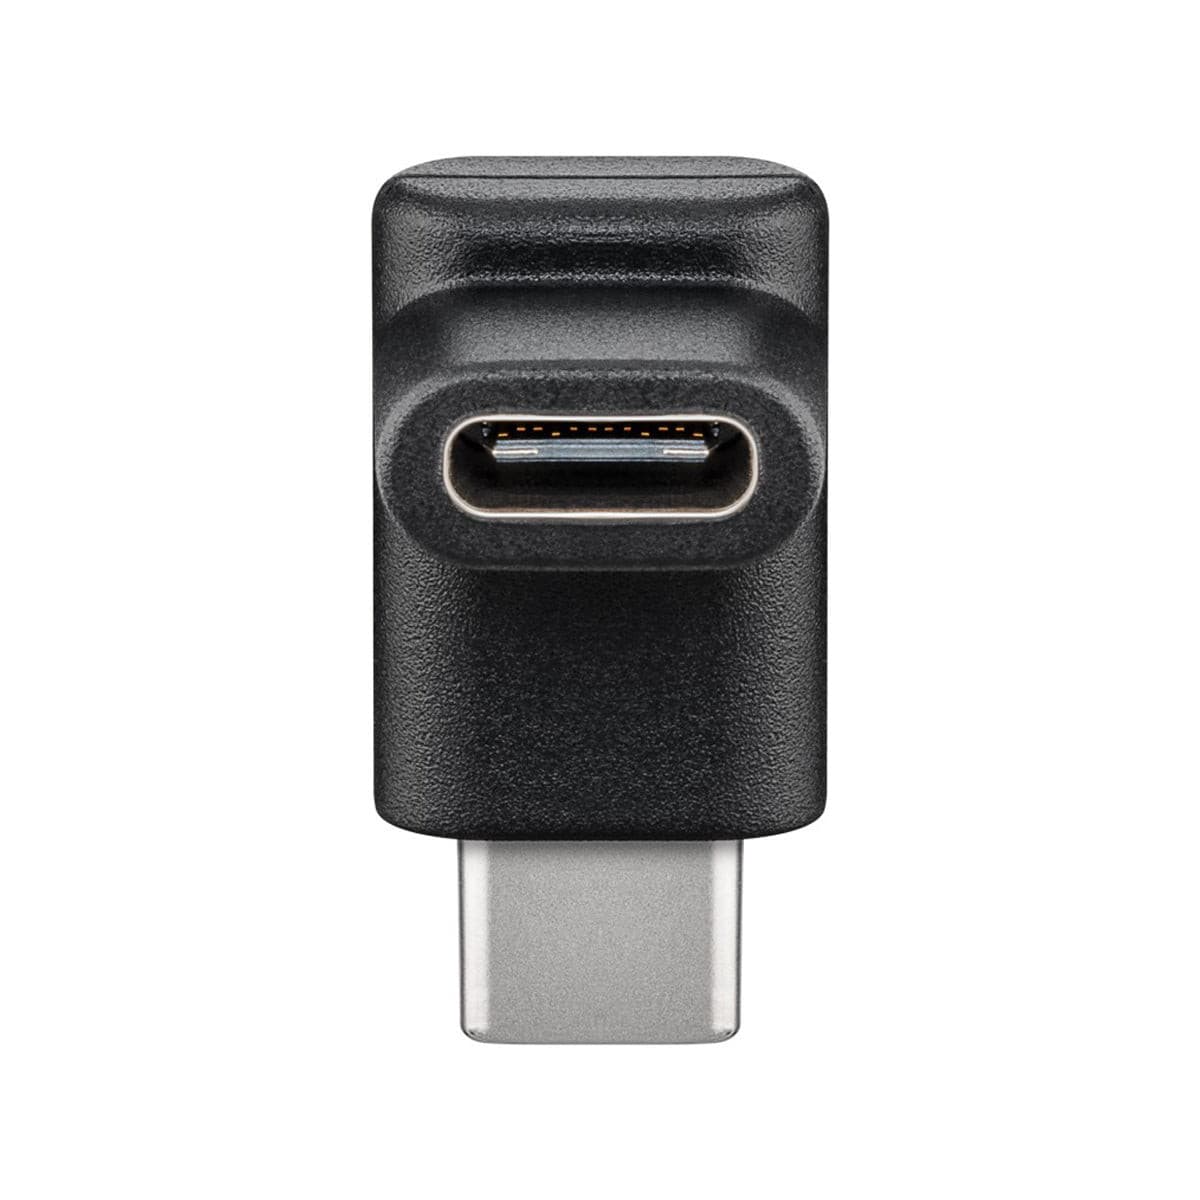 Goobay USB-C to USB-C Adapter 90 degree plug for USB-C cables - Black.